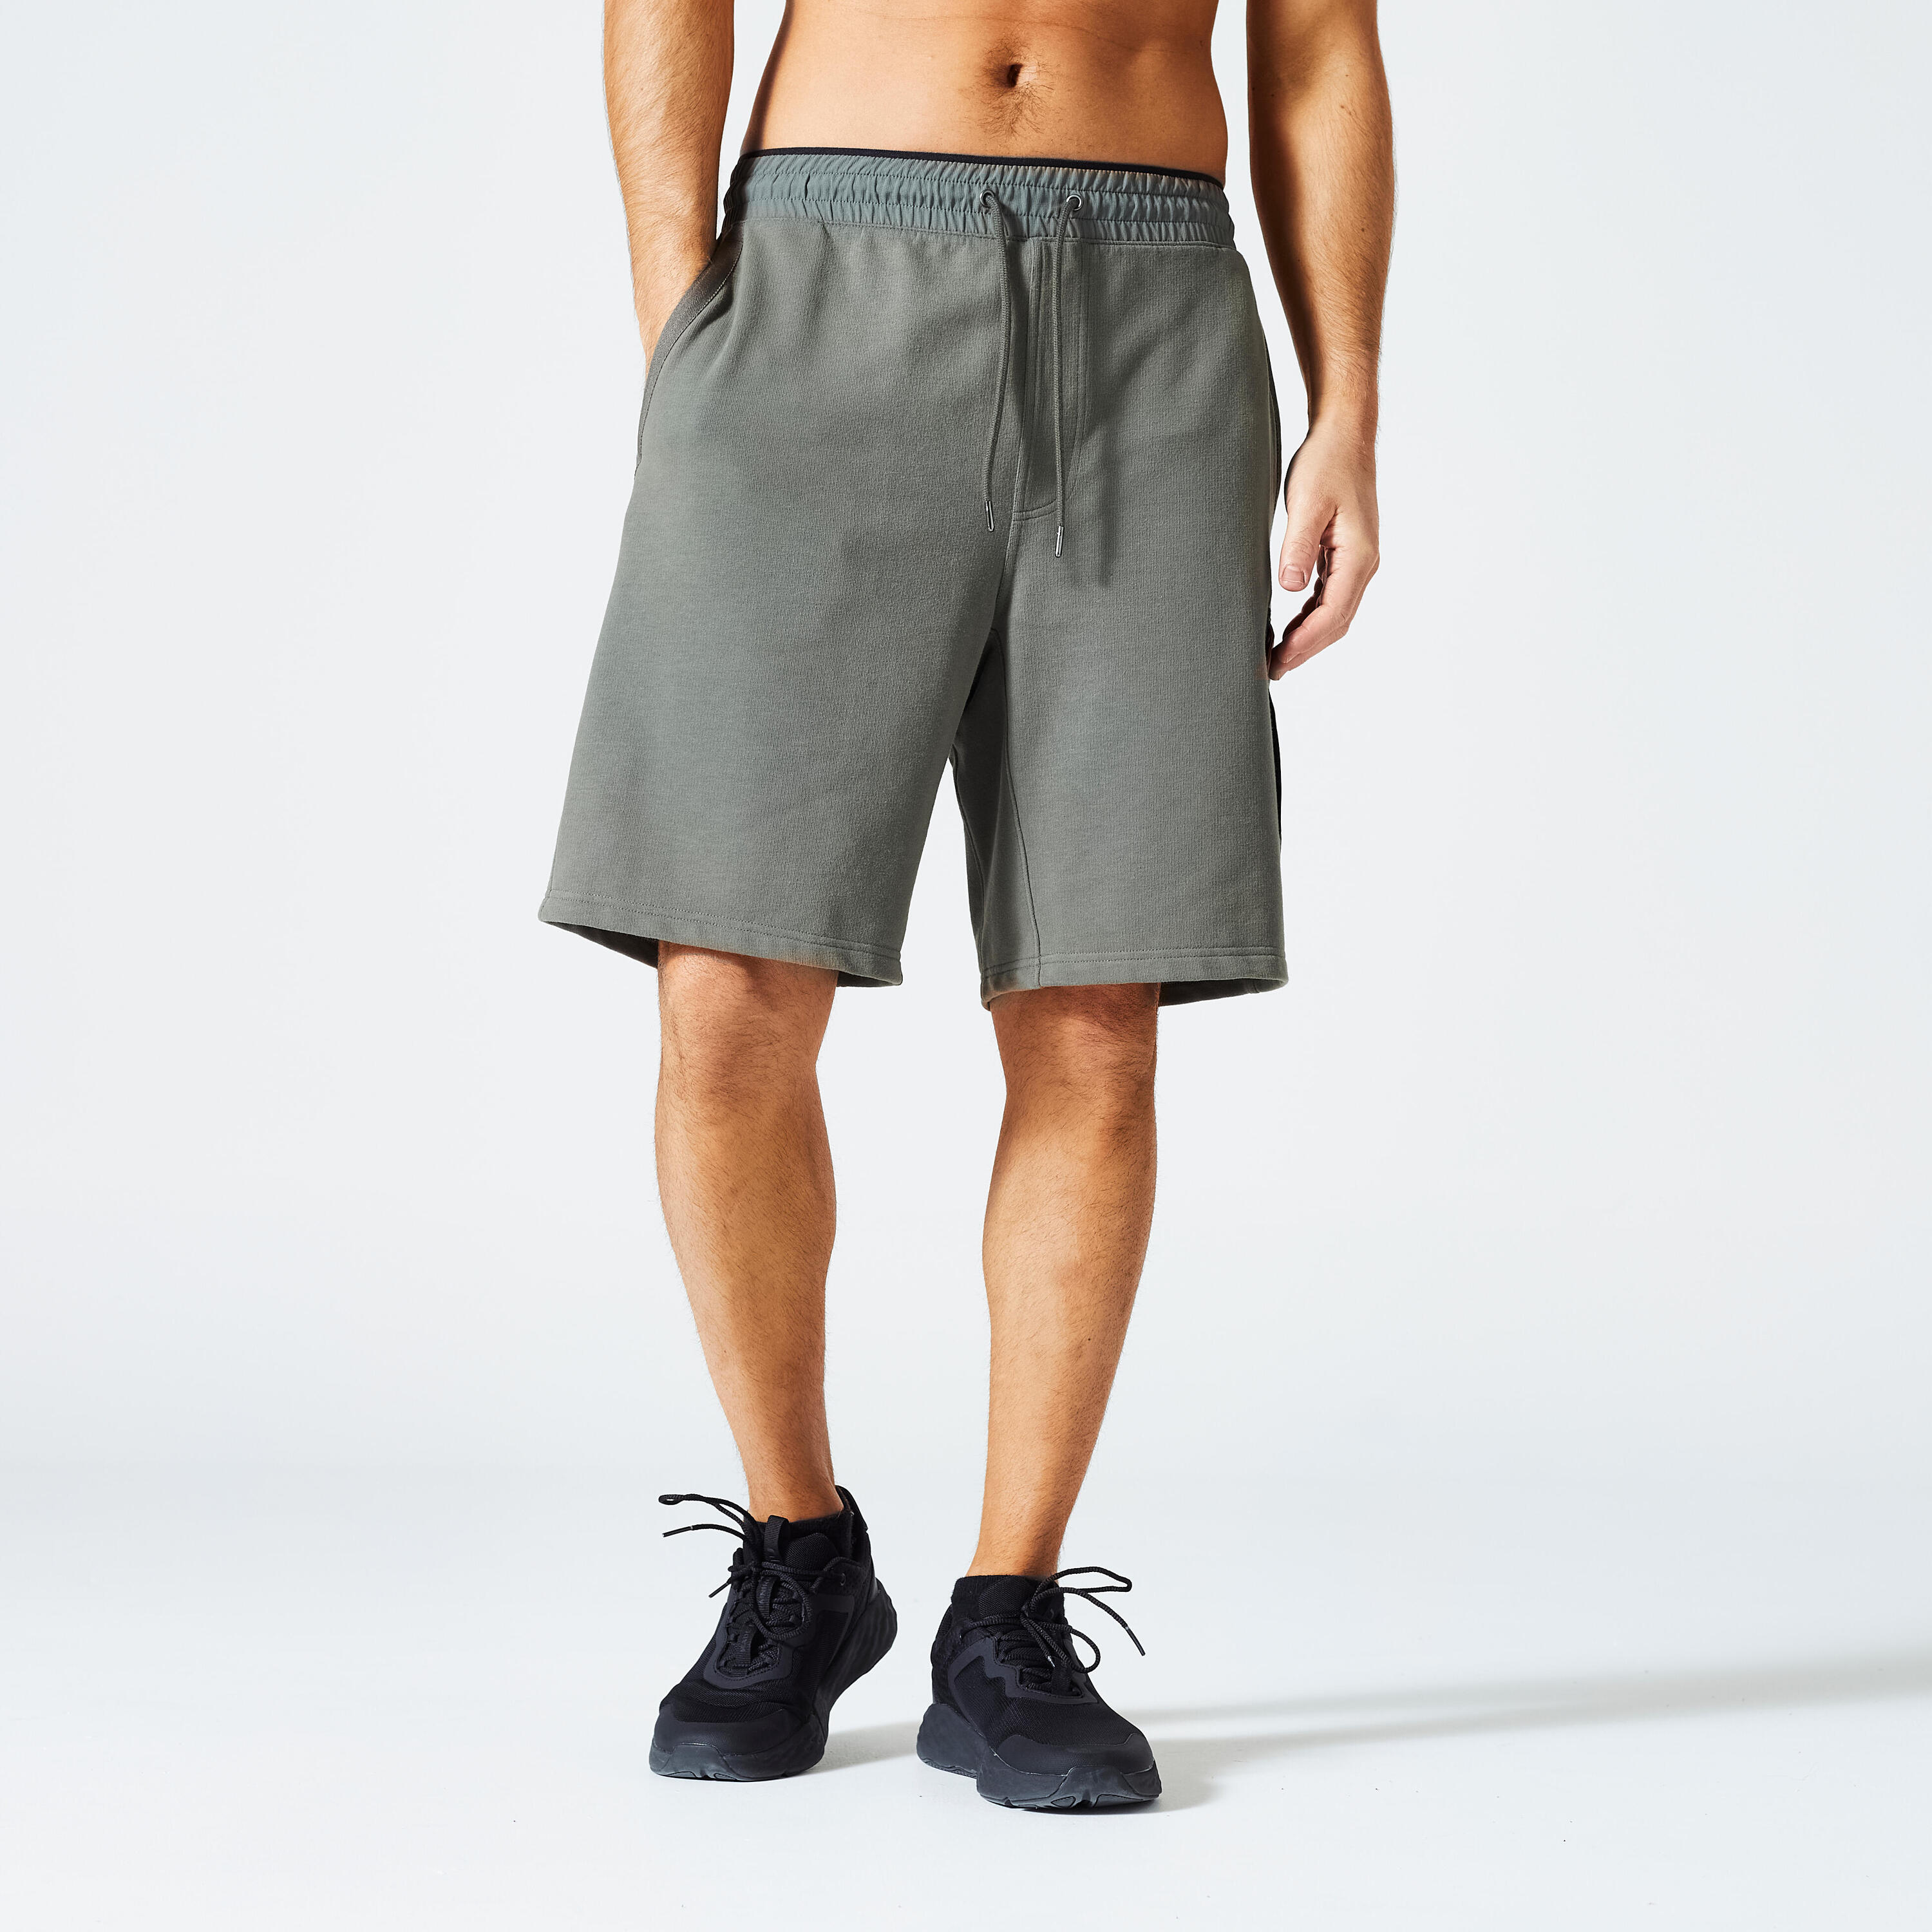 DOMYOS Men's Fitness Cargo Shorts 520 - Grey Khaki